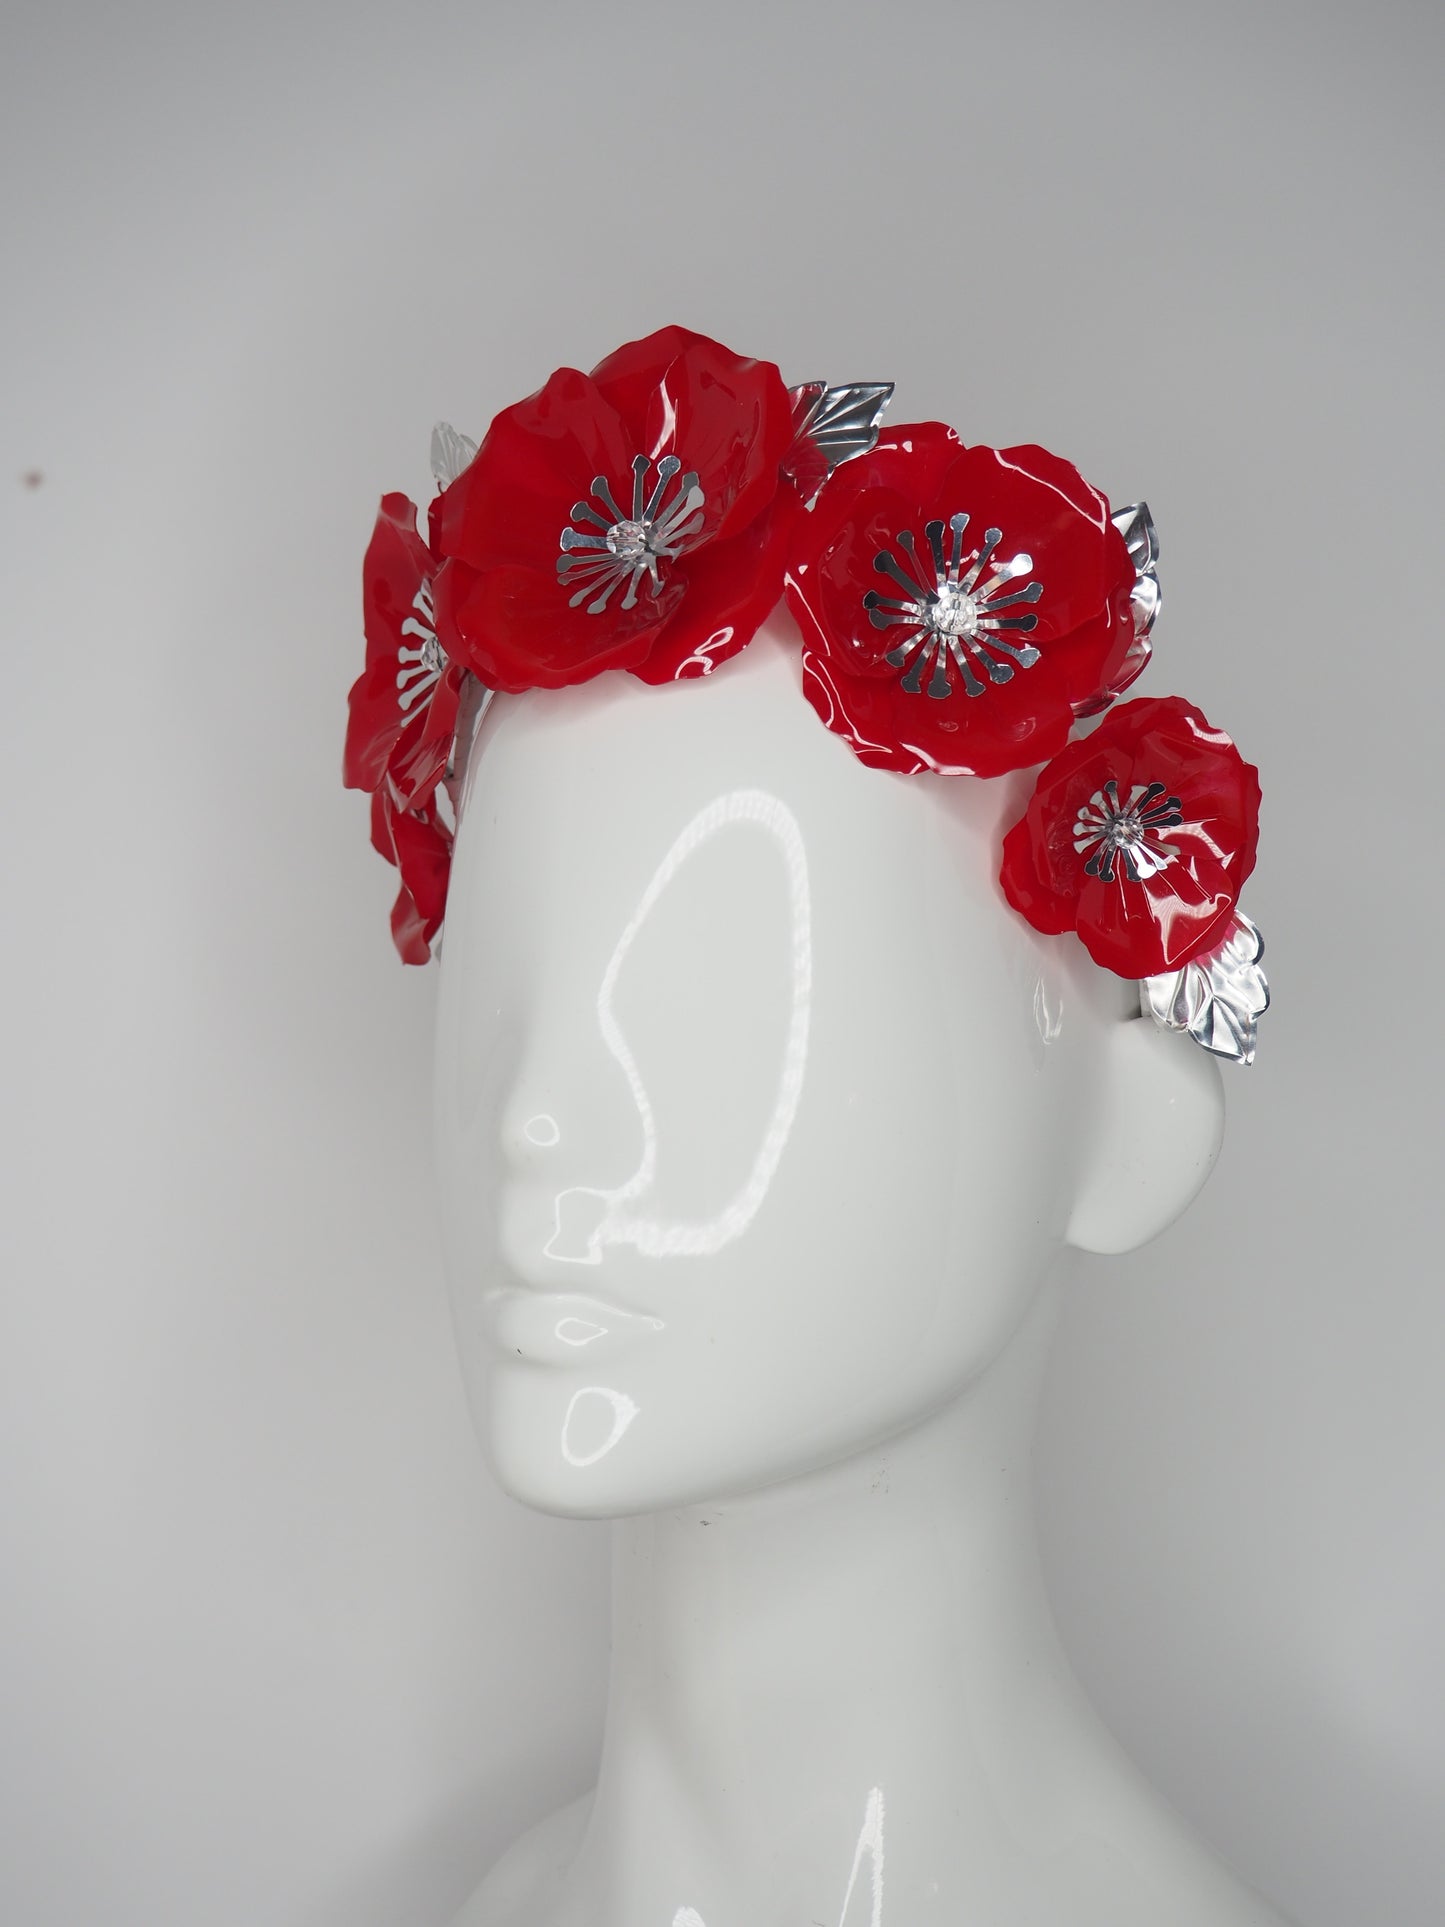 Princess poppy - Red Poppy headband with silver leaves